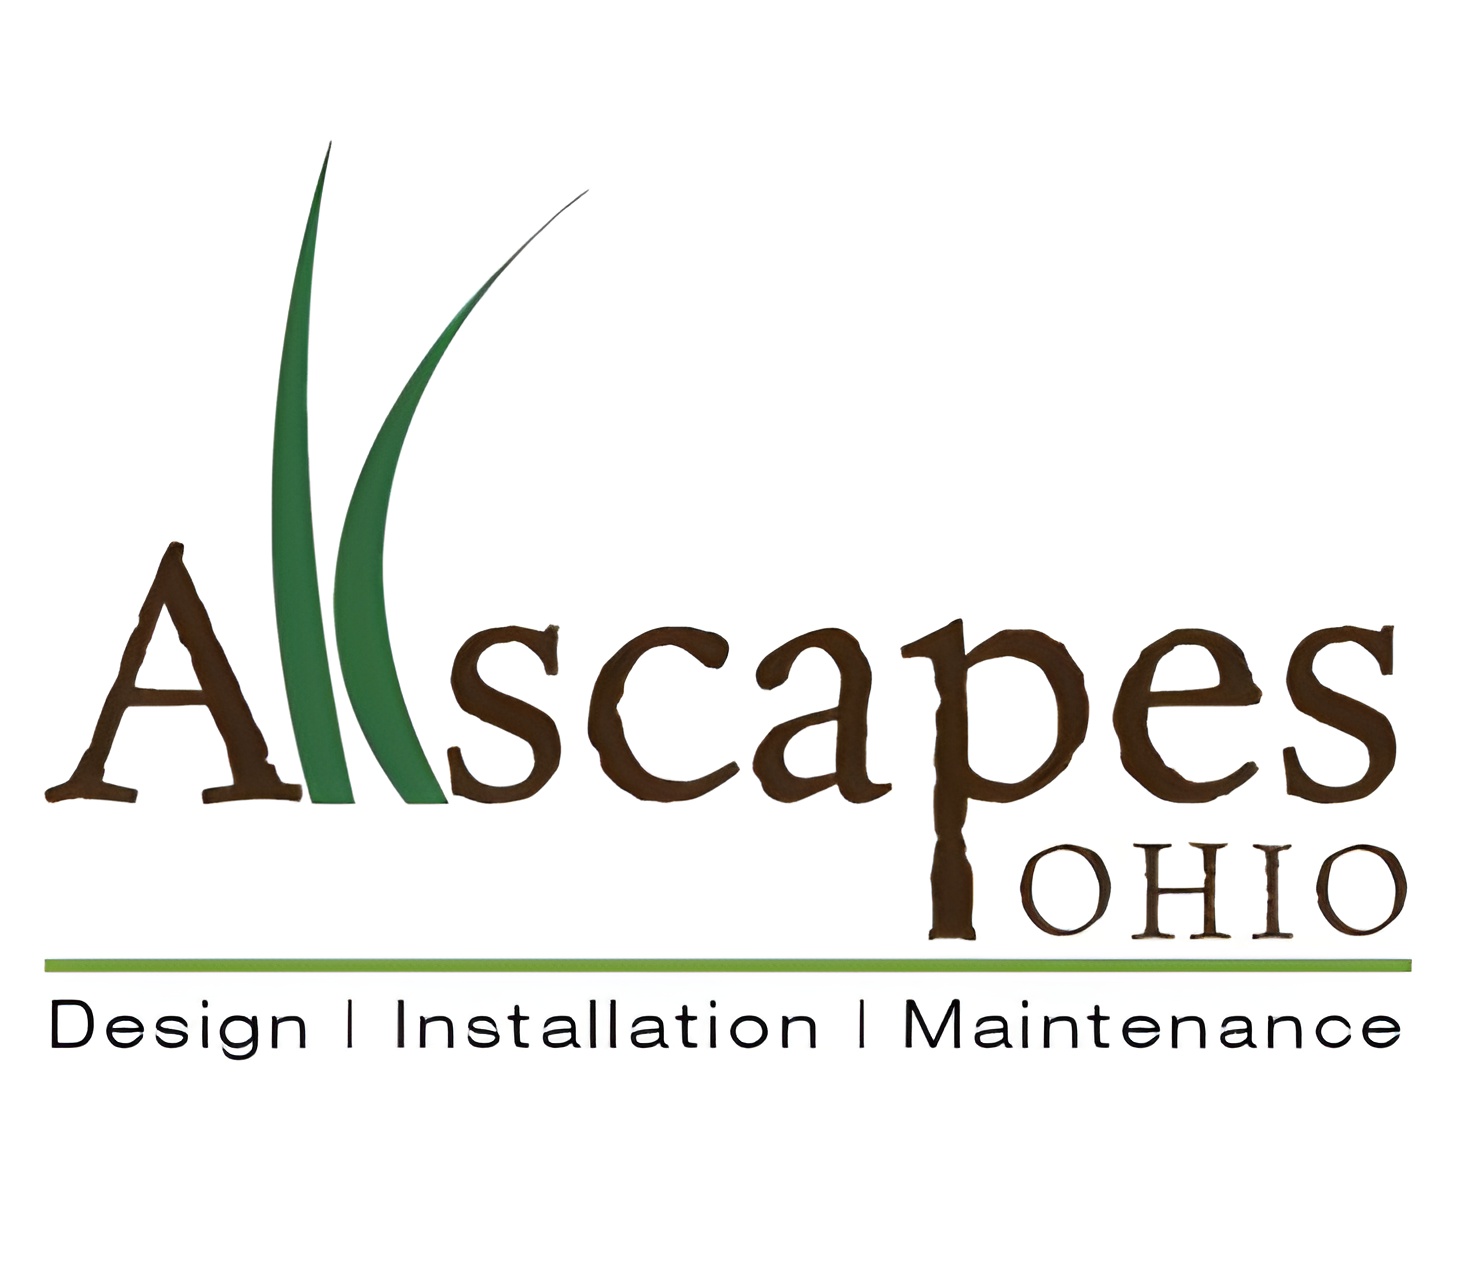 AllScapes Ohio review